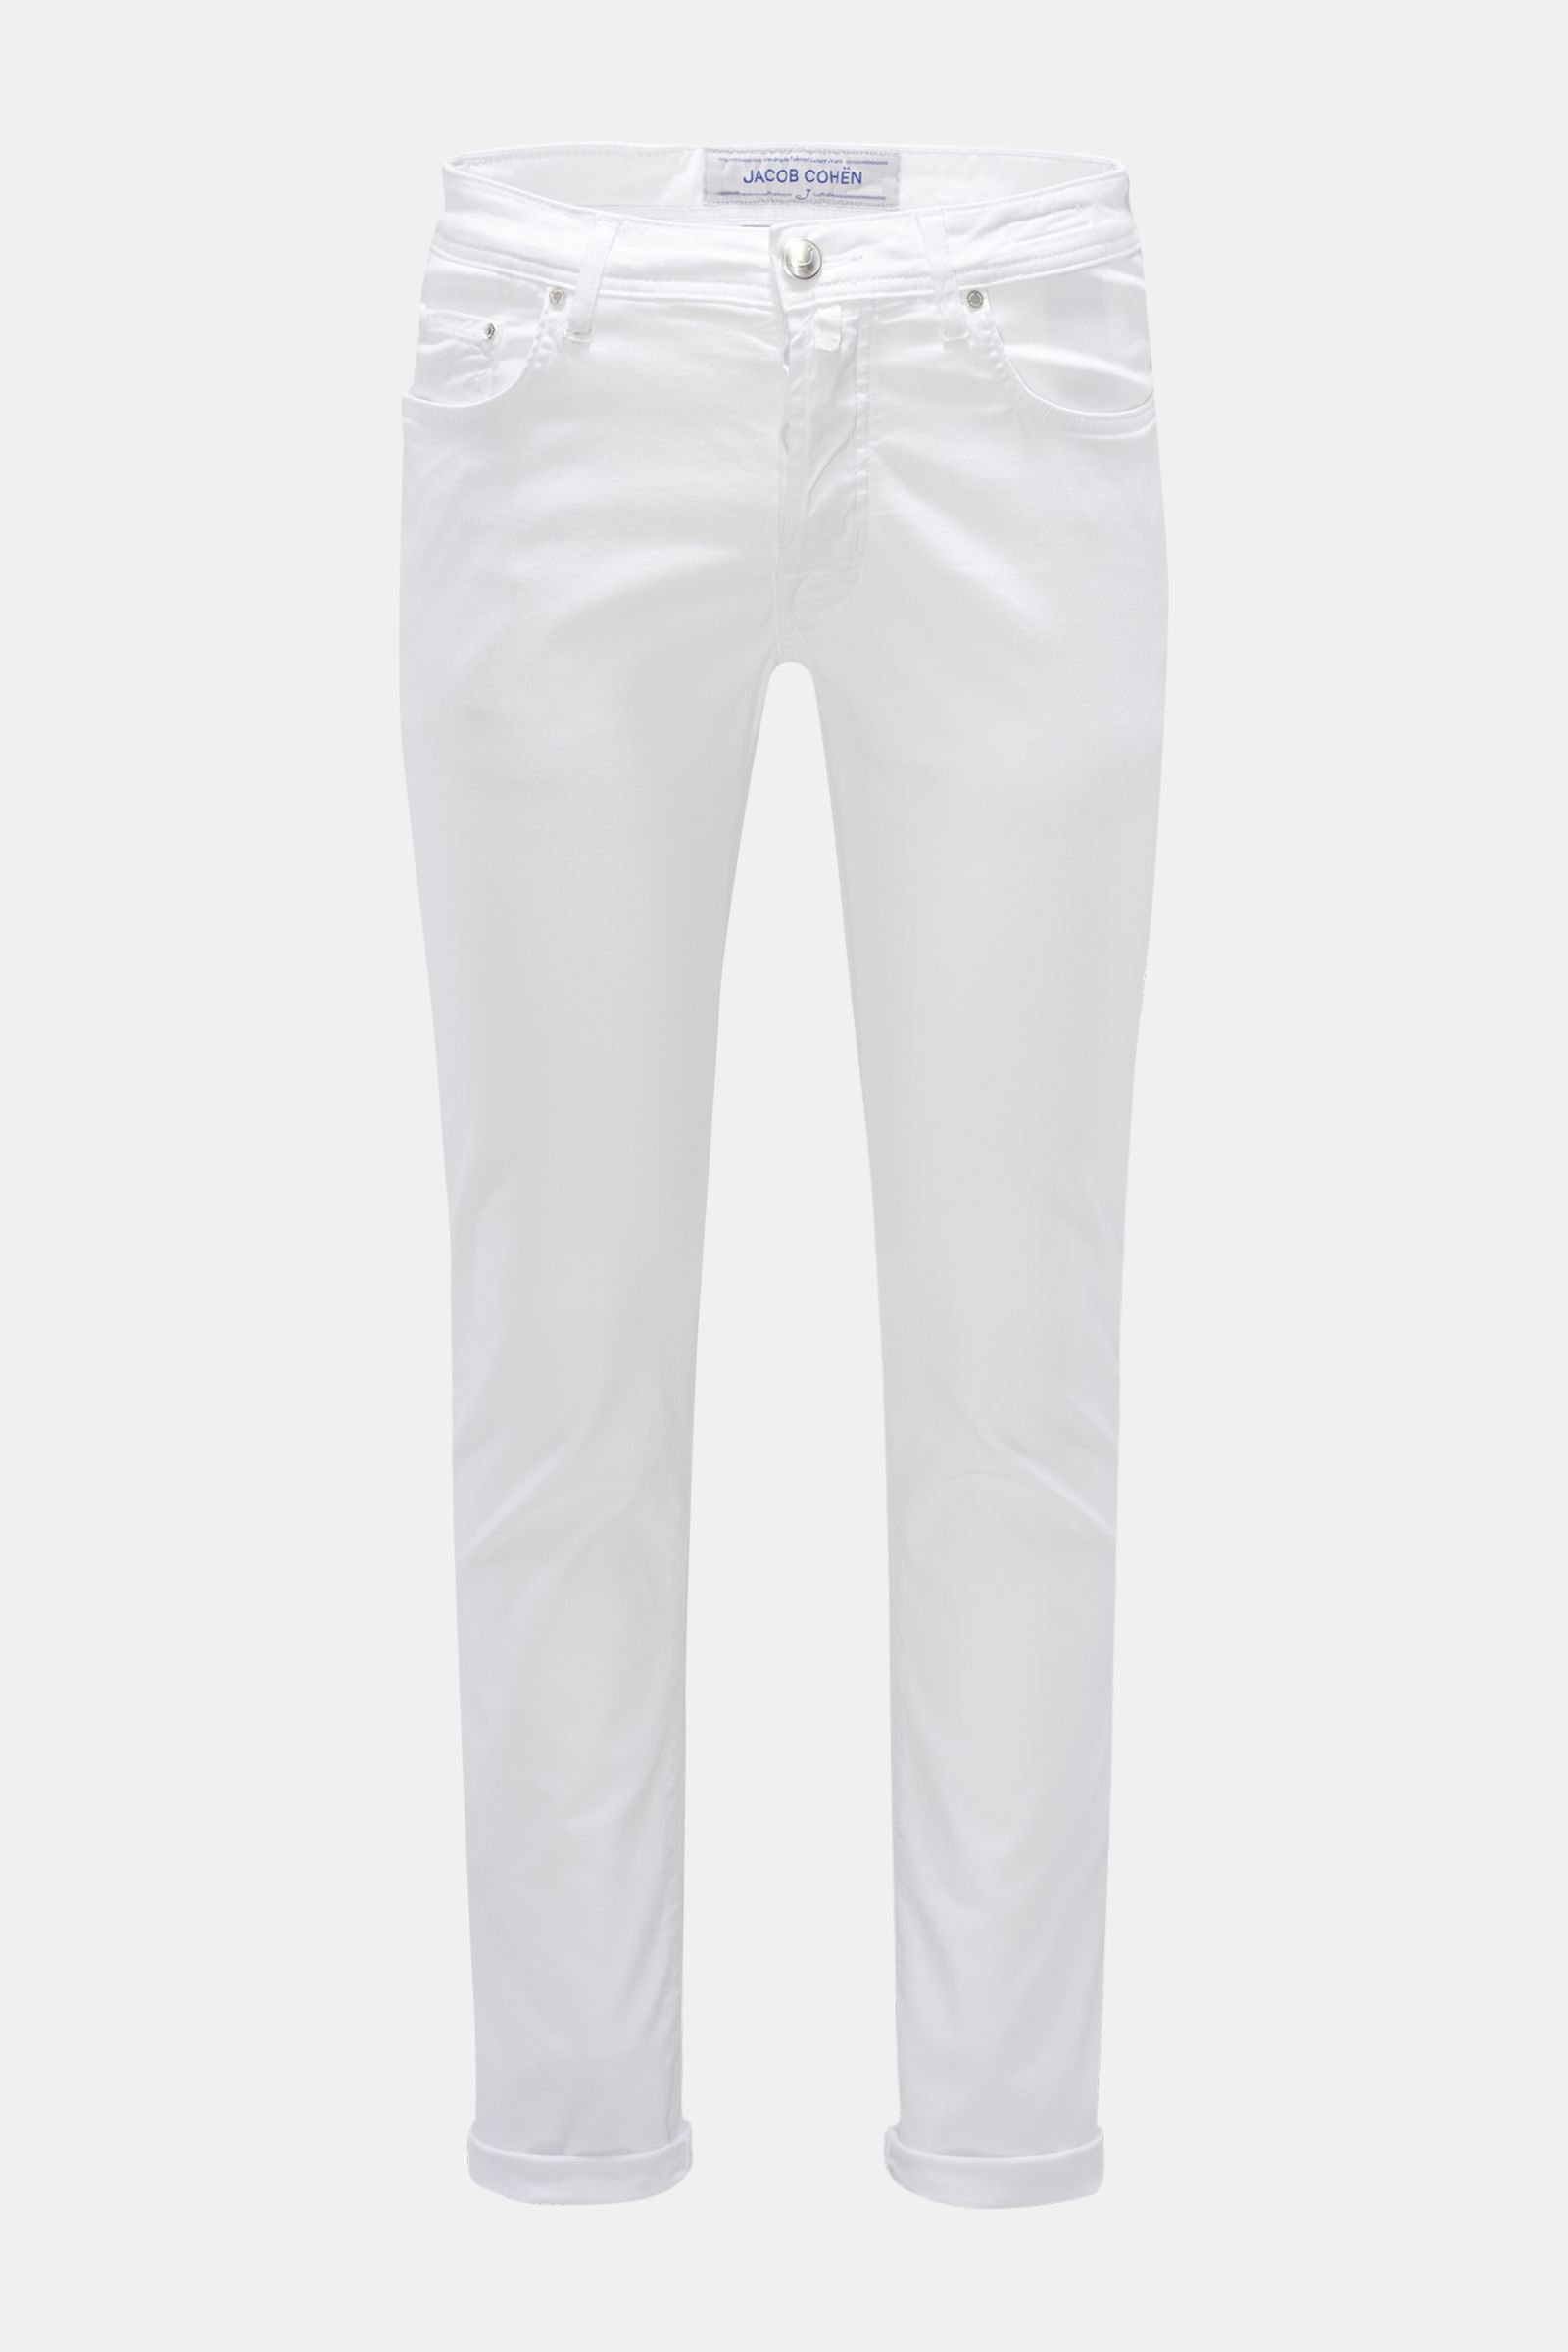 Trousers 'J688 Comfort Slim Fit' white